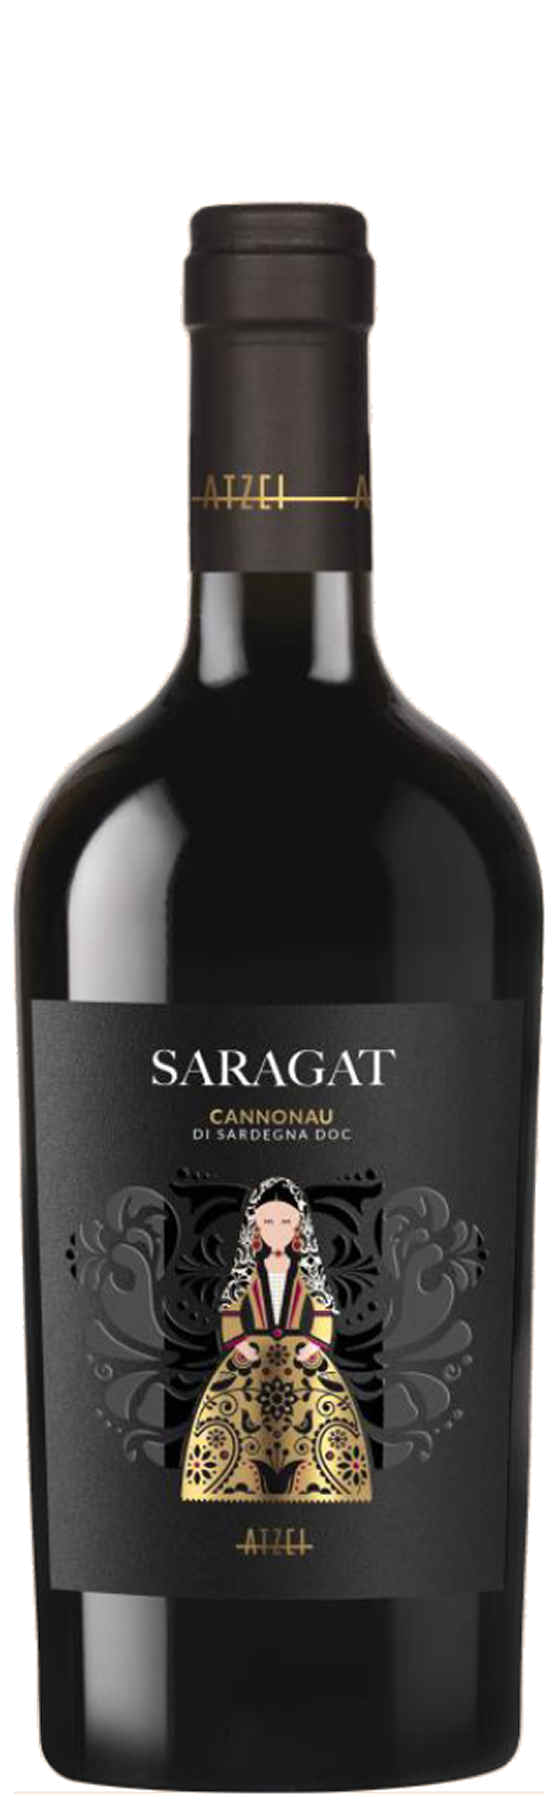 Saragat Cannonau di Sardegna DOC